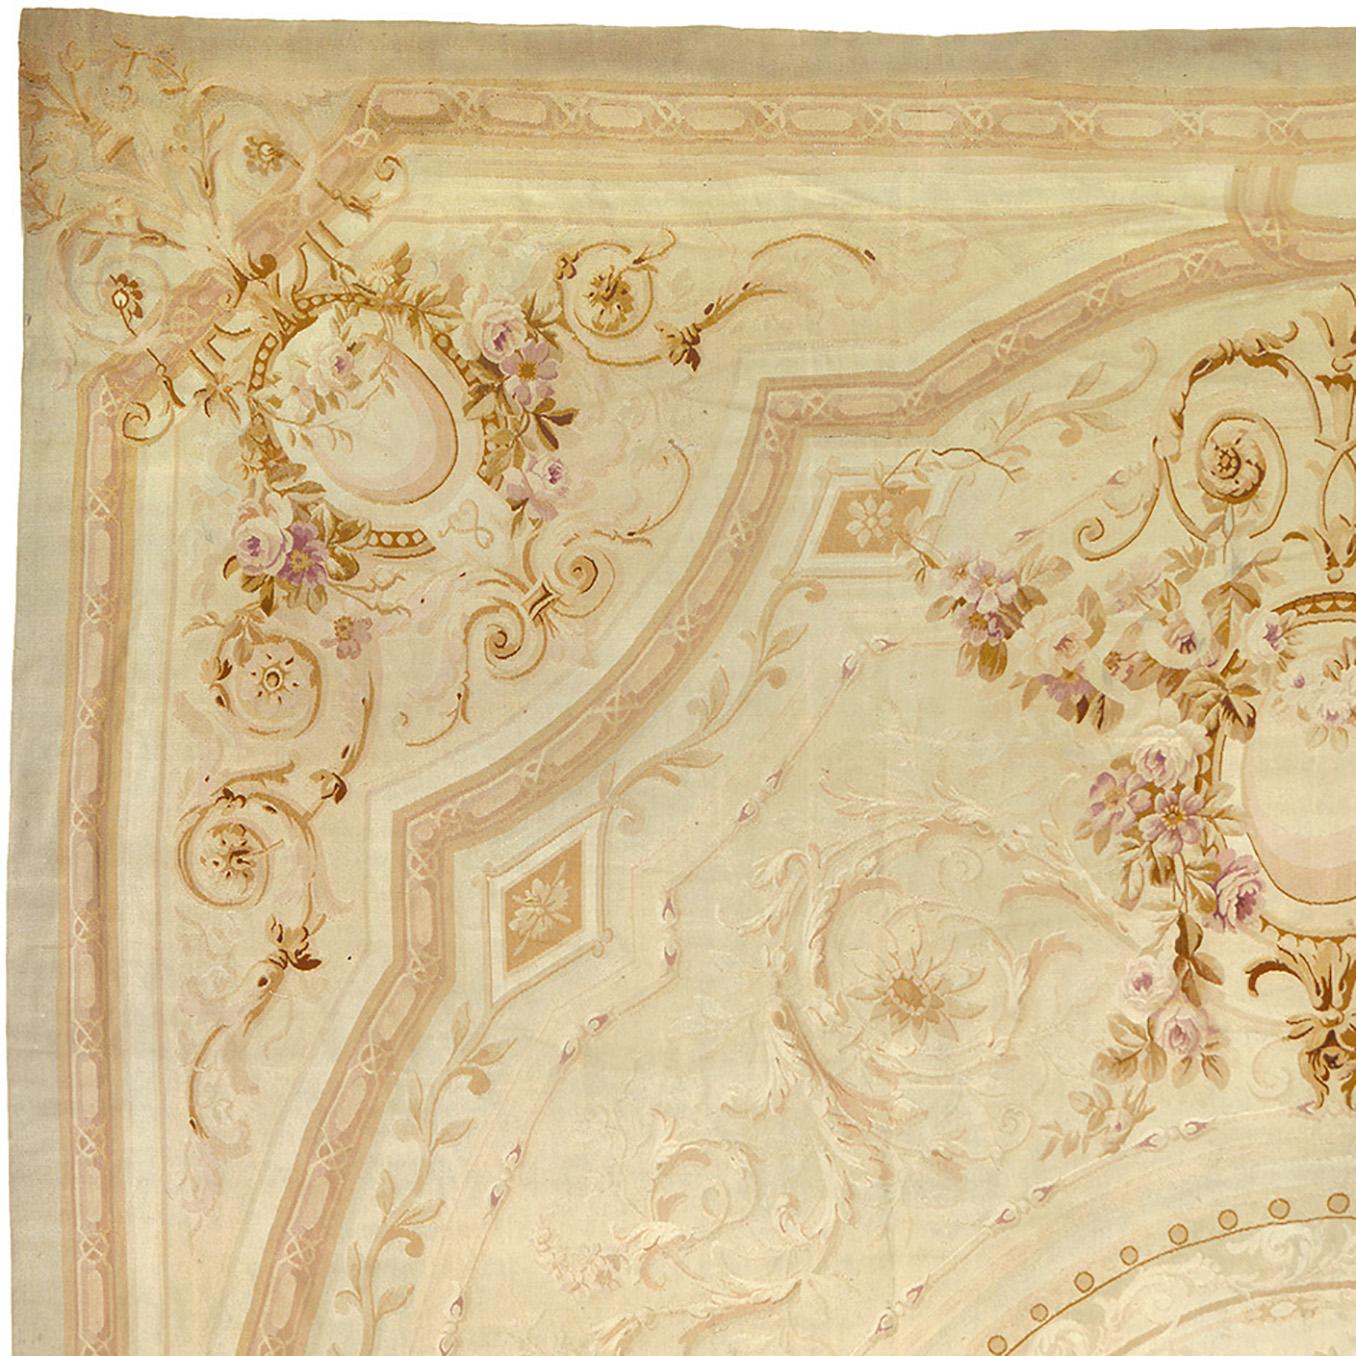 Antique Aubusson rug
France, 1870
Beige and pink floral design
Dimensional border

21'4